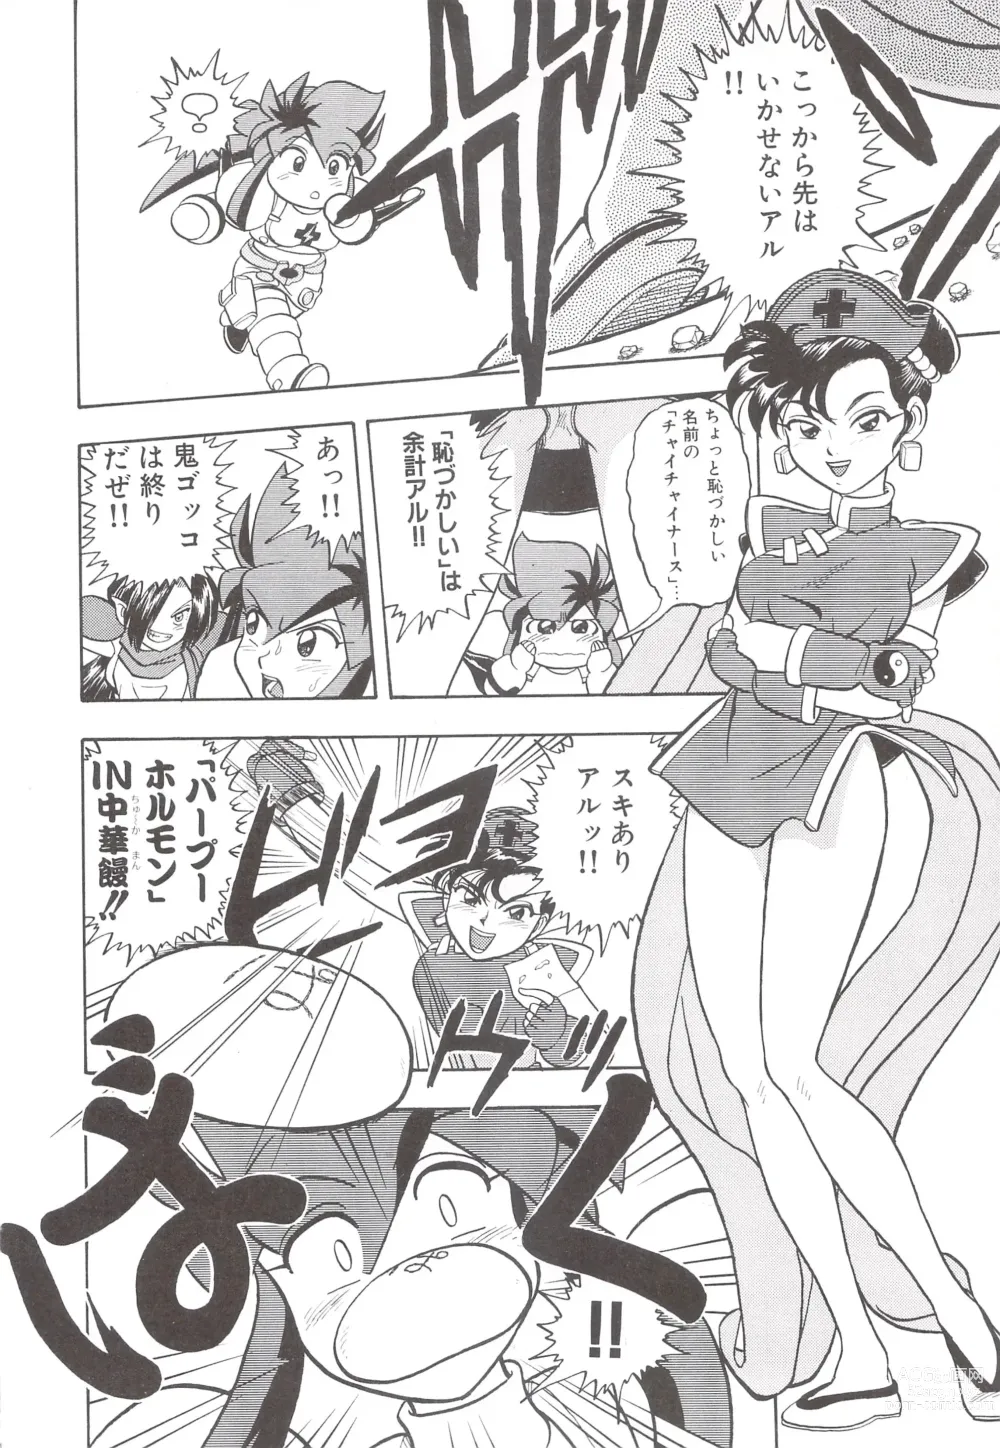 Page 222 of manga Cocktail Anthology Comic Mix Shake